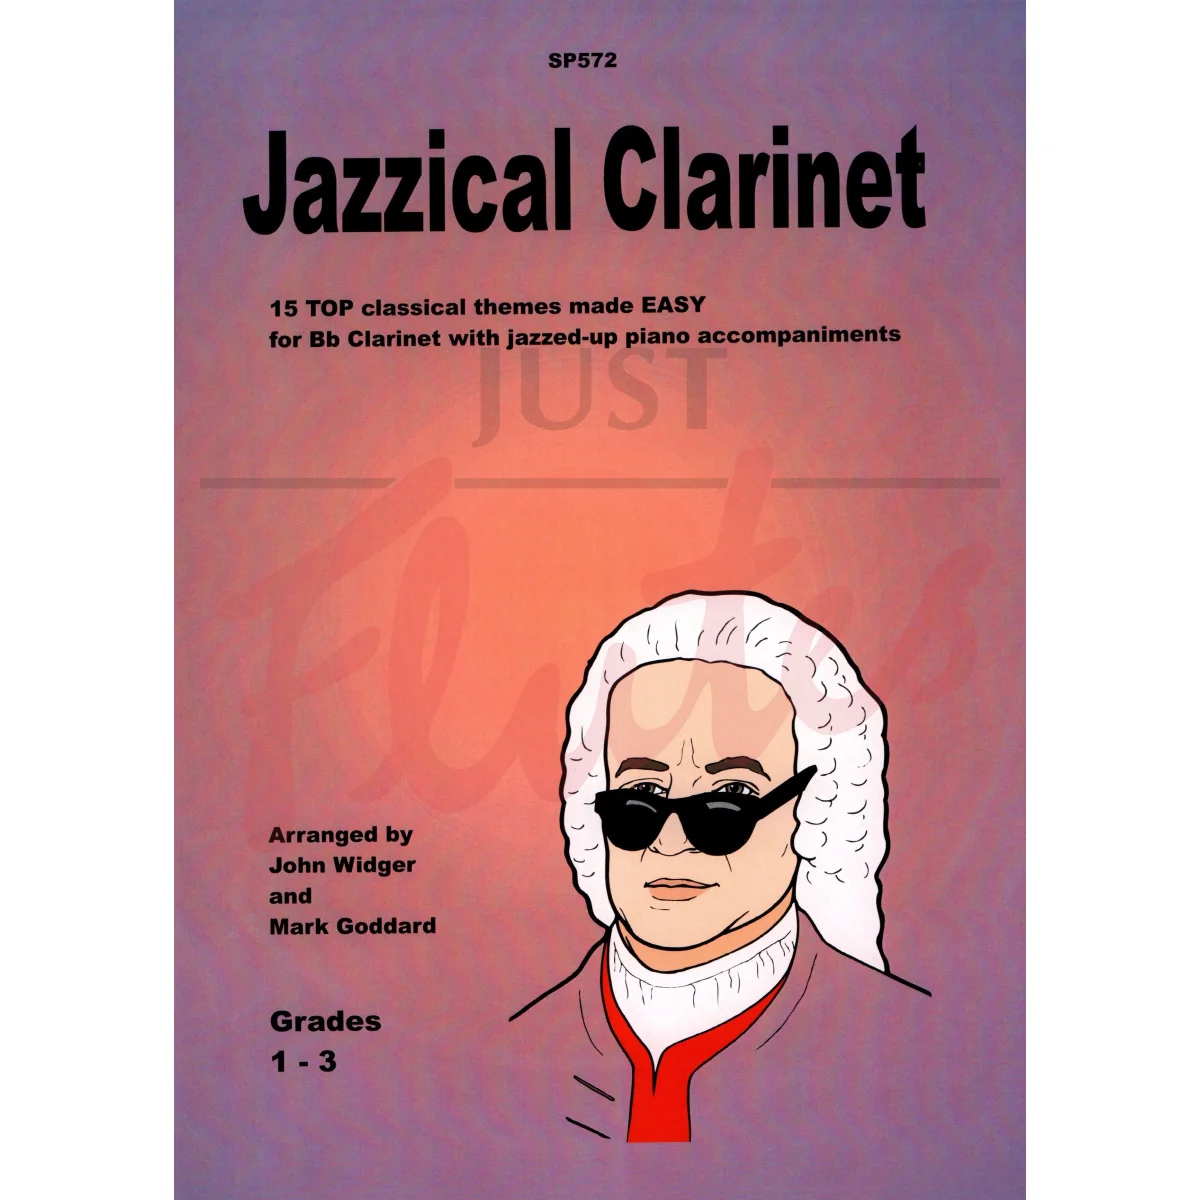 Jazzical Clarinet